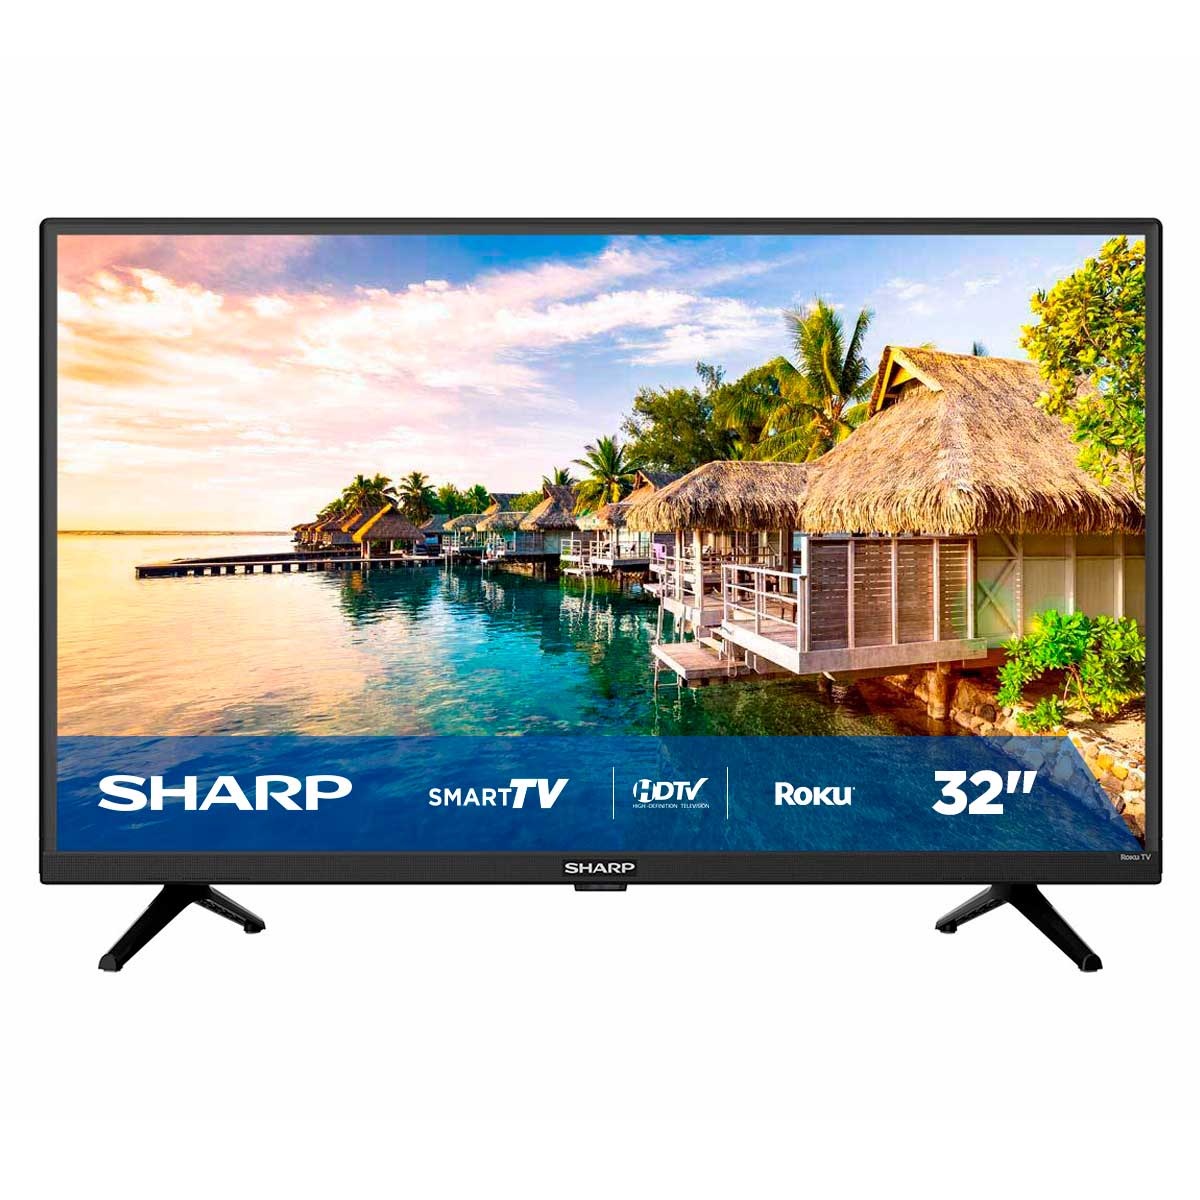 Pantalla Sharp 42 Pulgadas Smart TV FHD Roku 2T-C42DF3UR